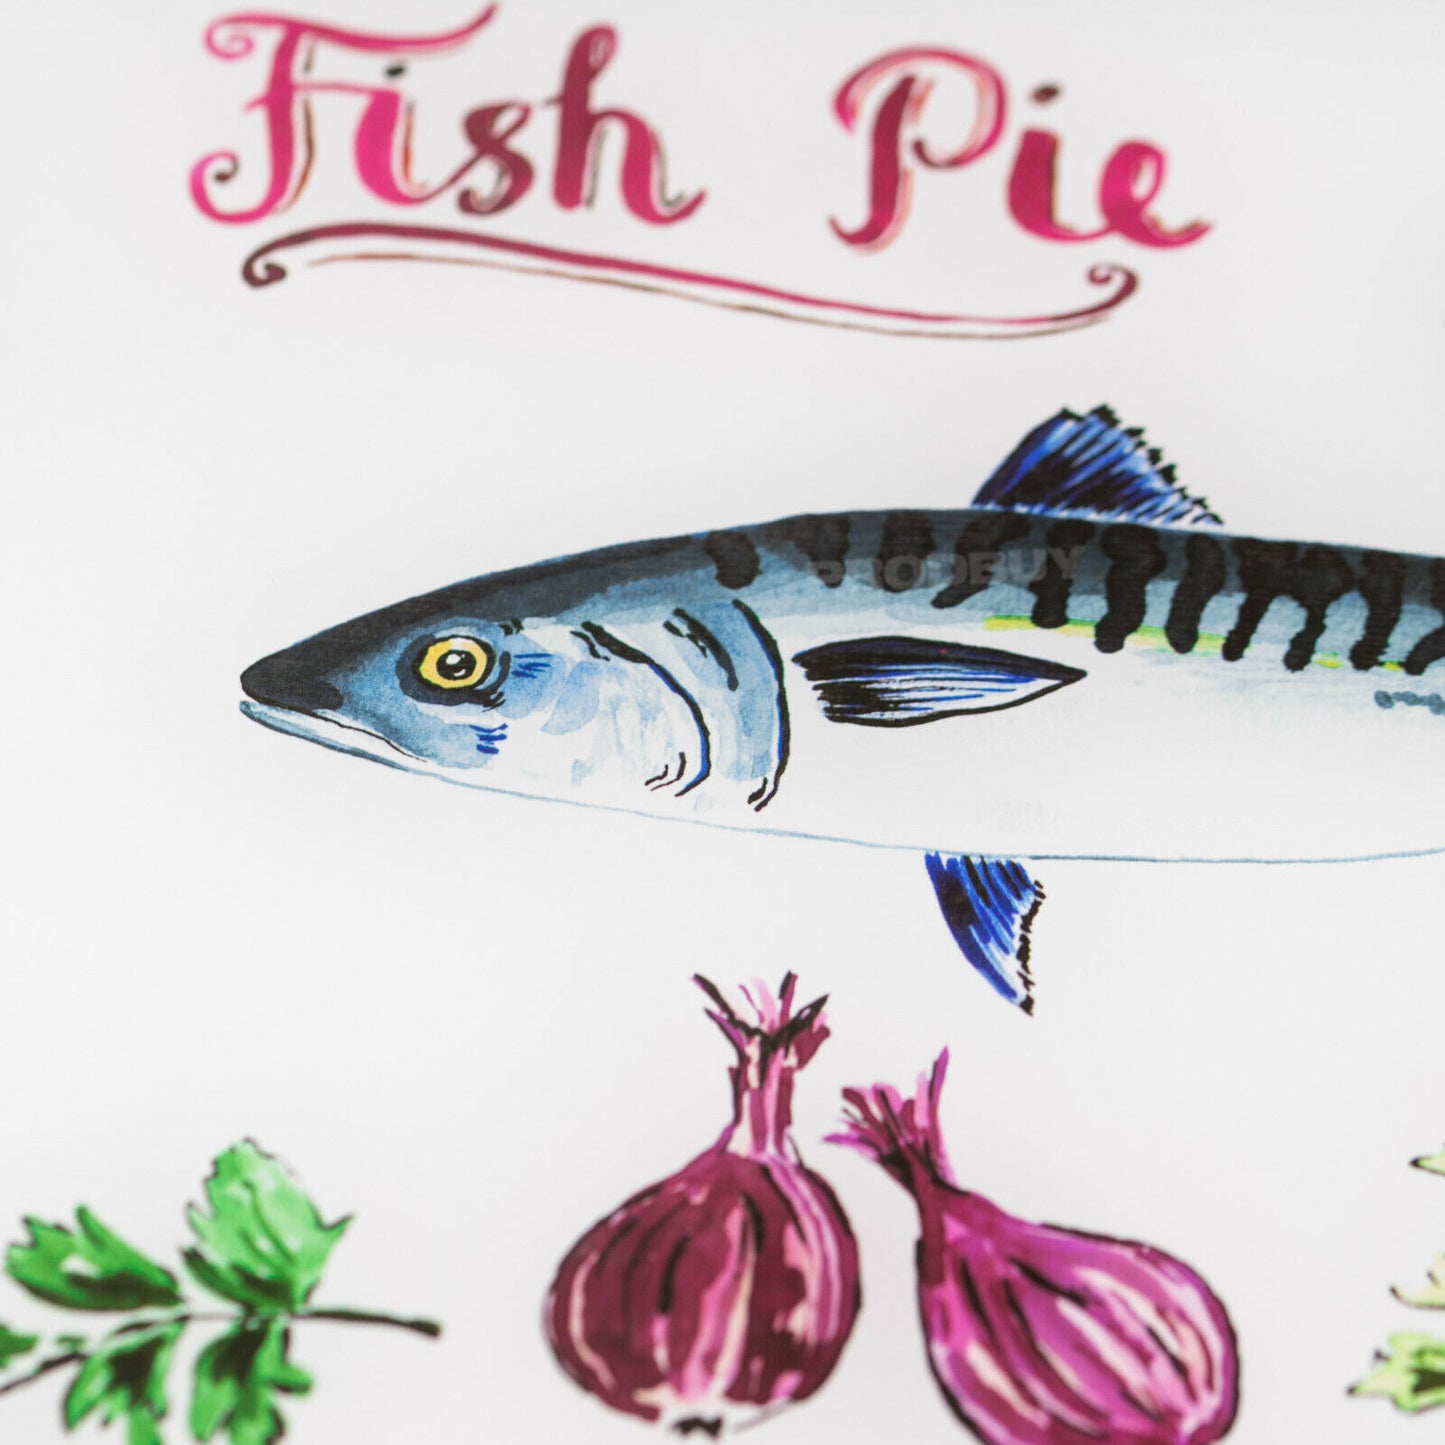 Fish Pie Recipe 40cm Glass Worktop Saver